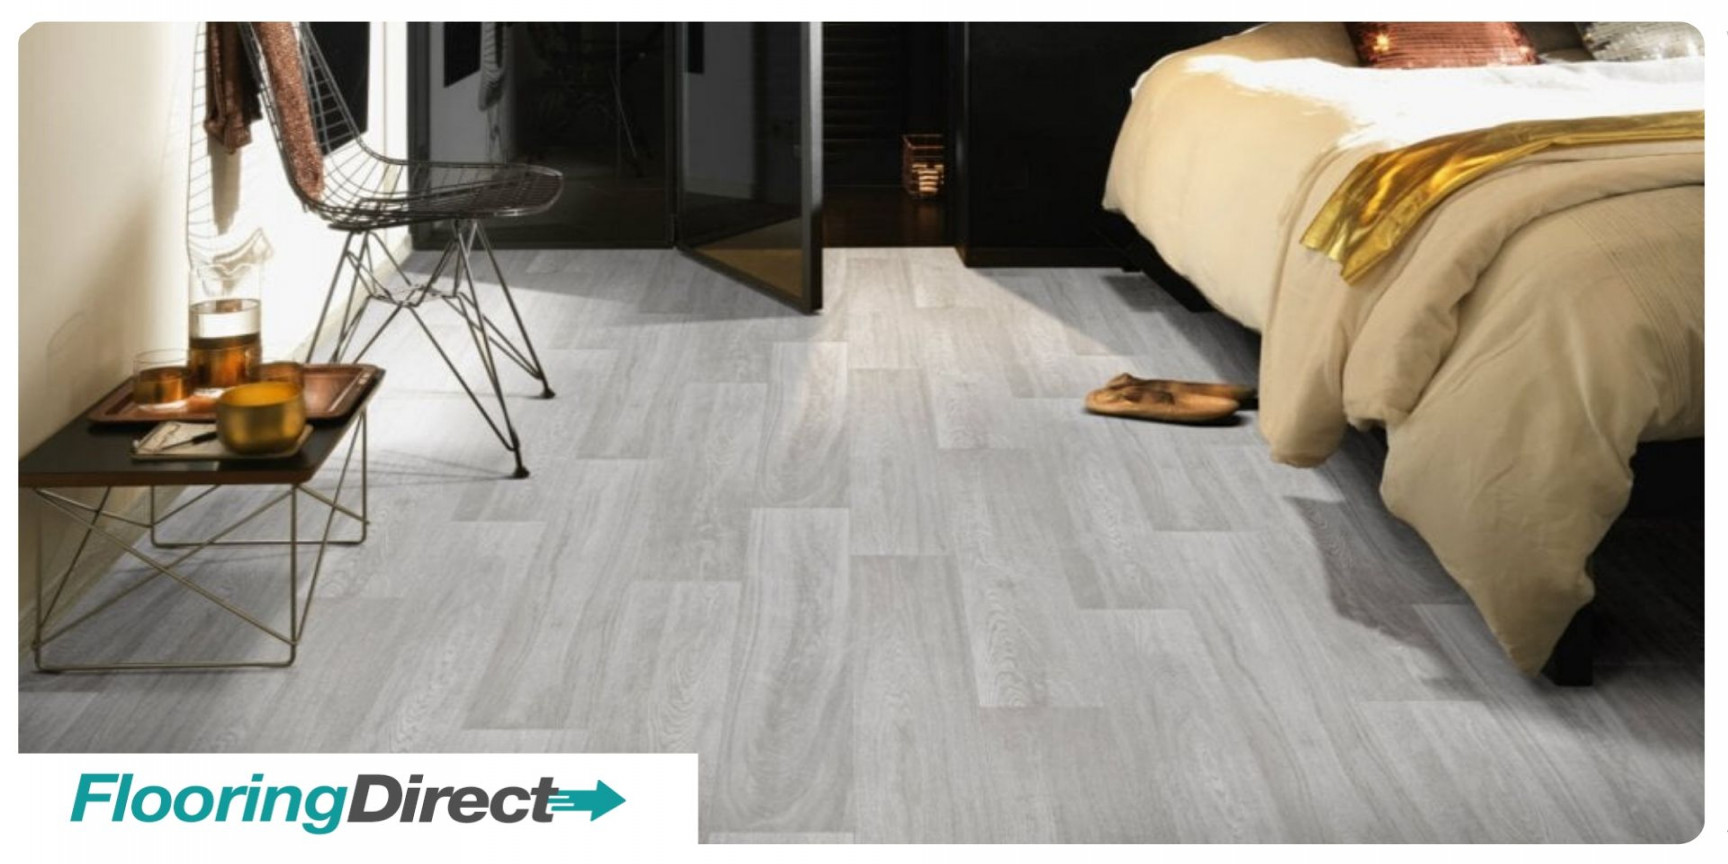 Where can I find cheap lino flooring? - Flooring DirectFlooring Direct